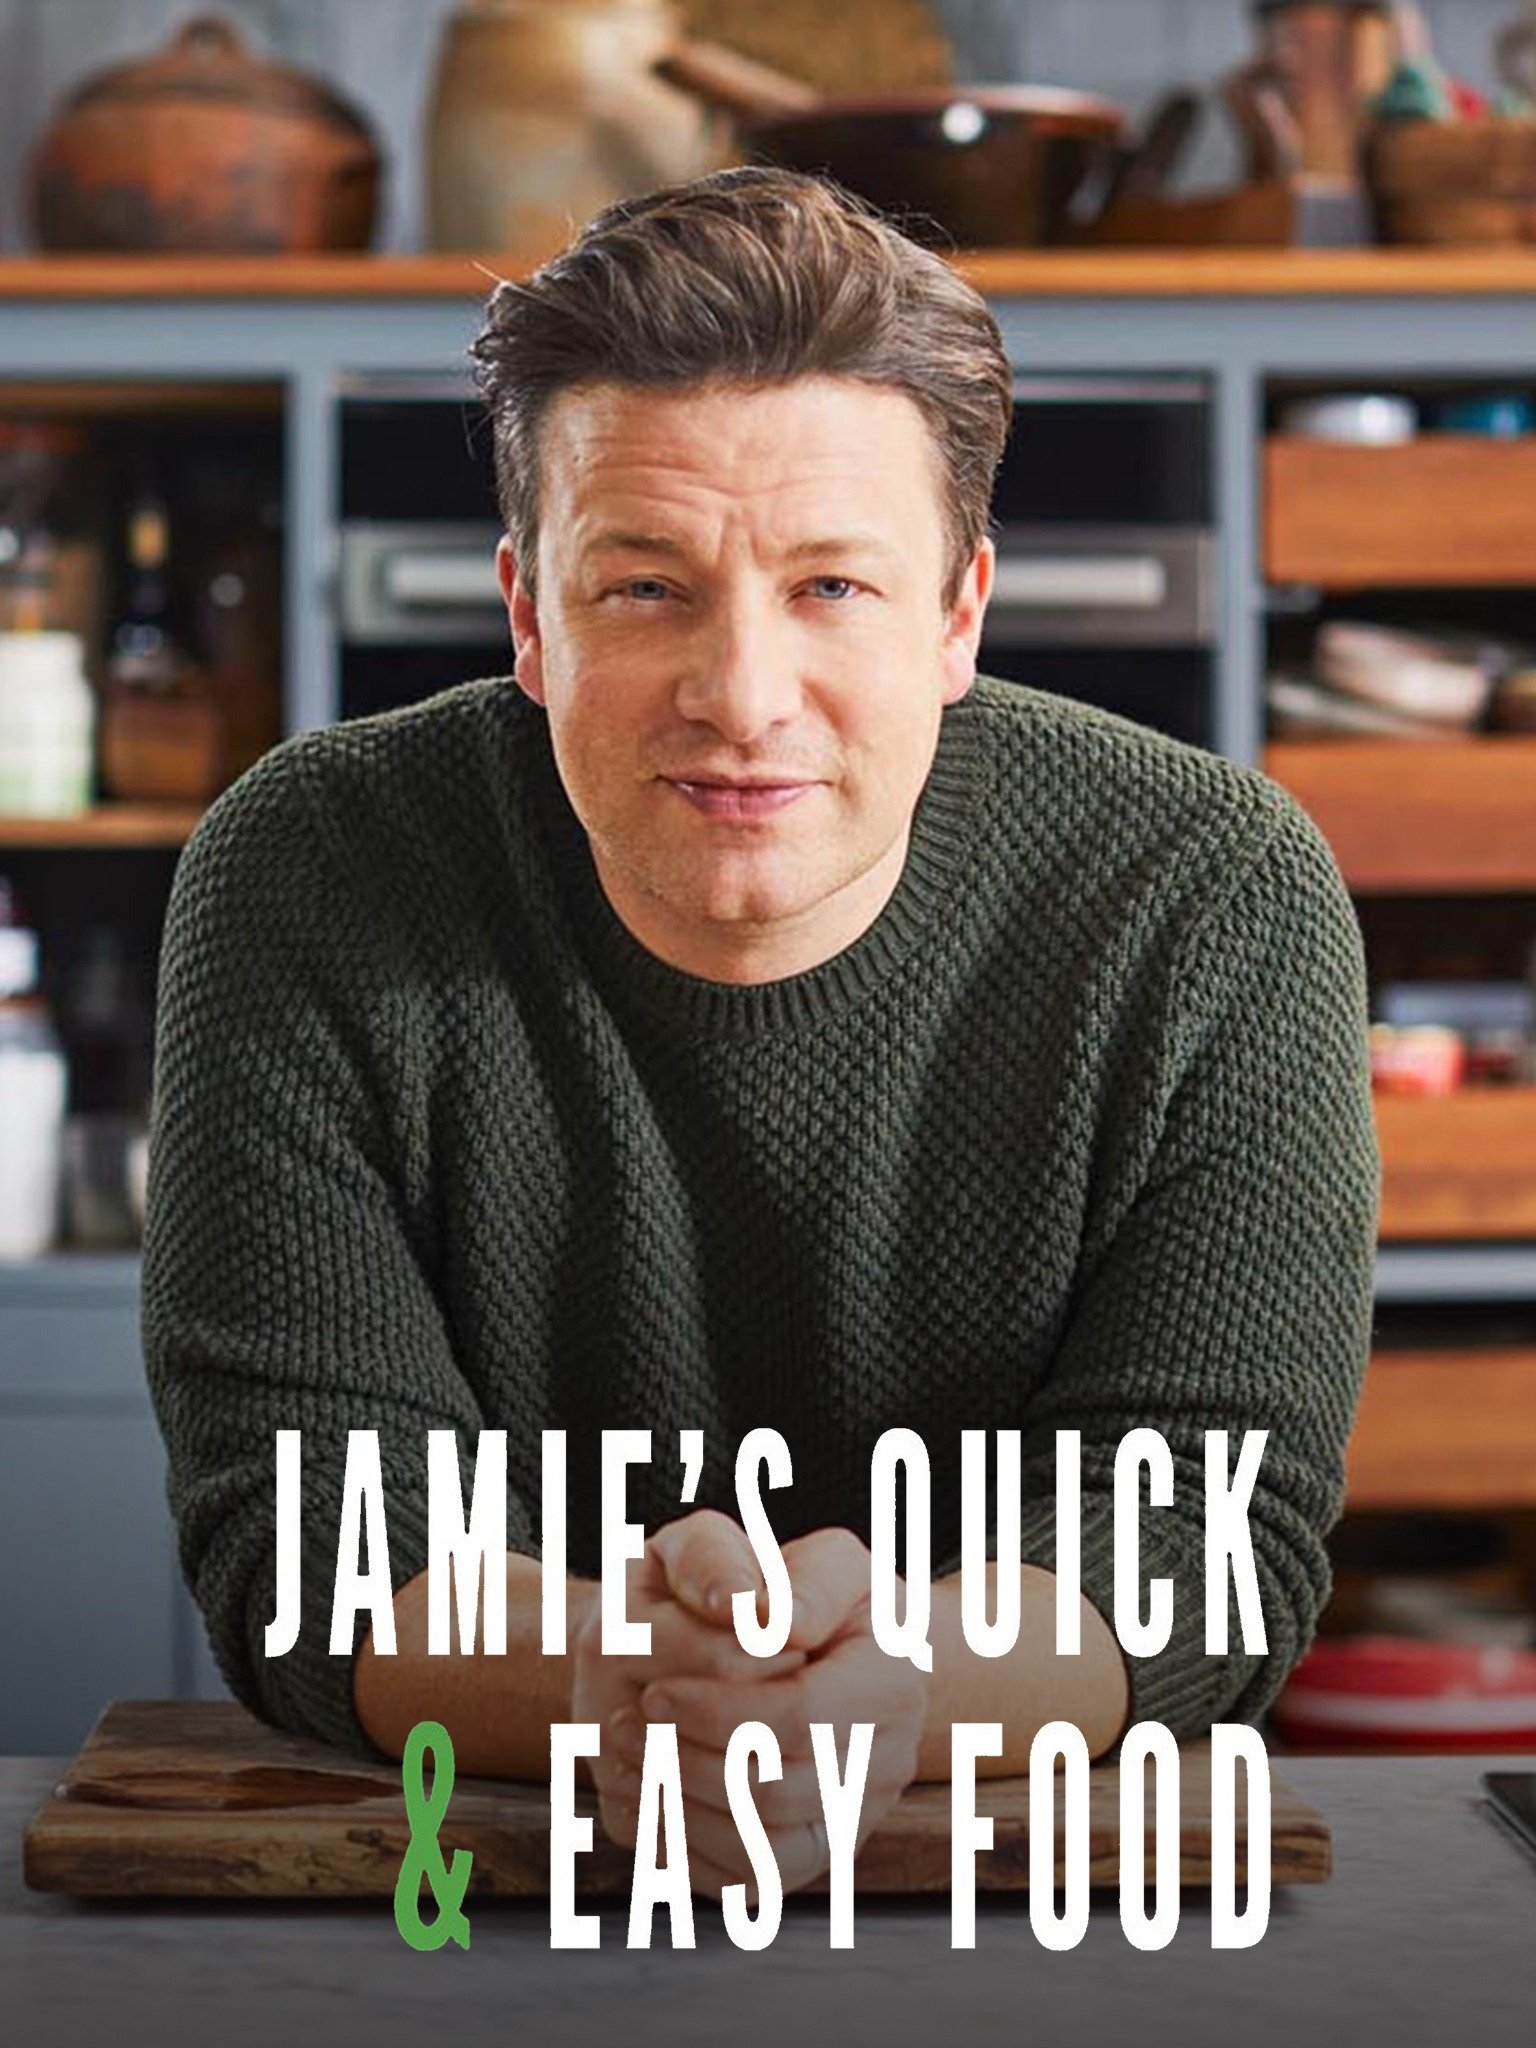 Jamie's Quick & Easy Food: Season 4 Pictures - Rotten Tomatoes